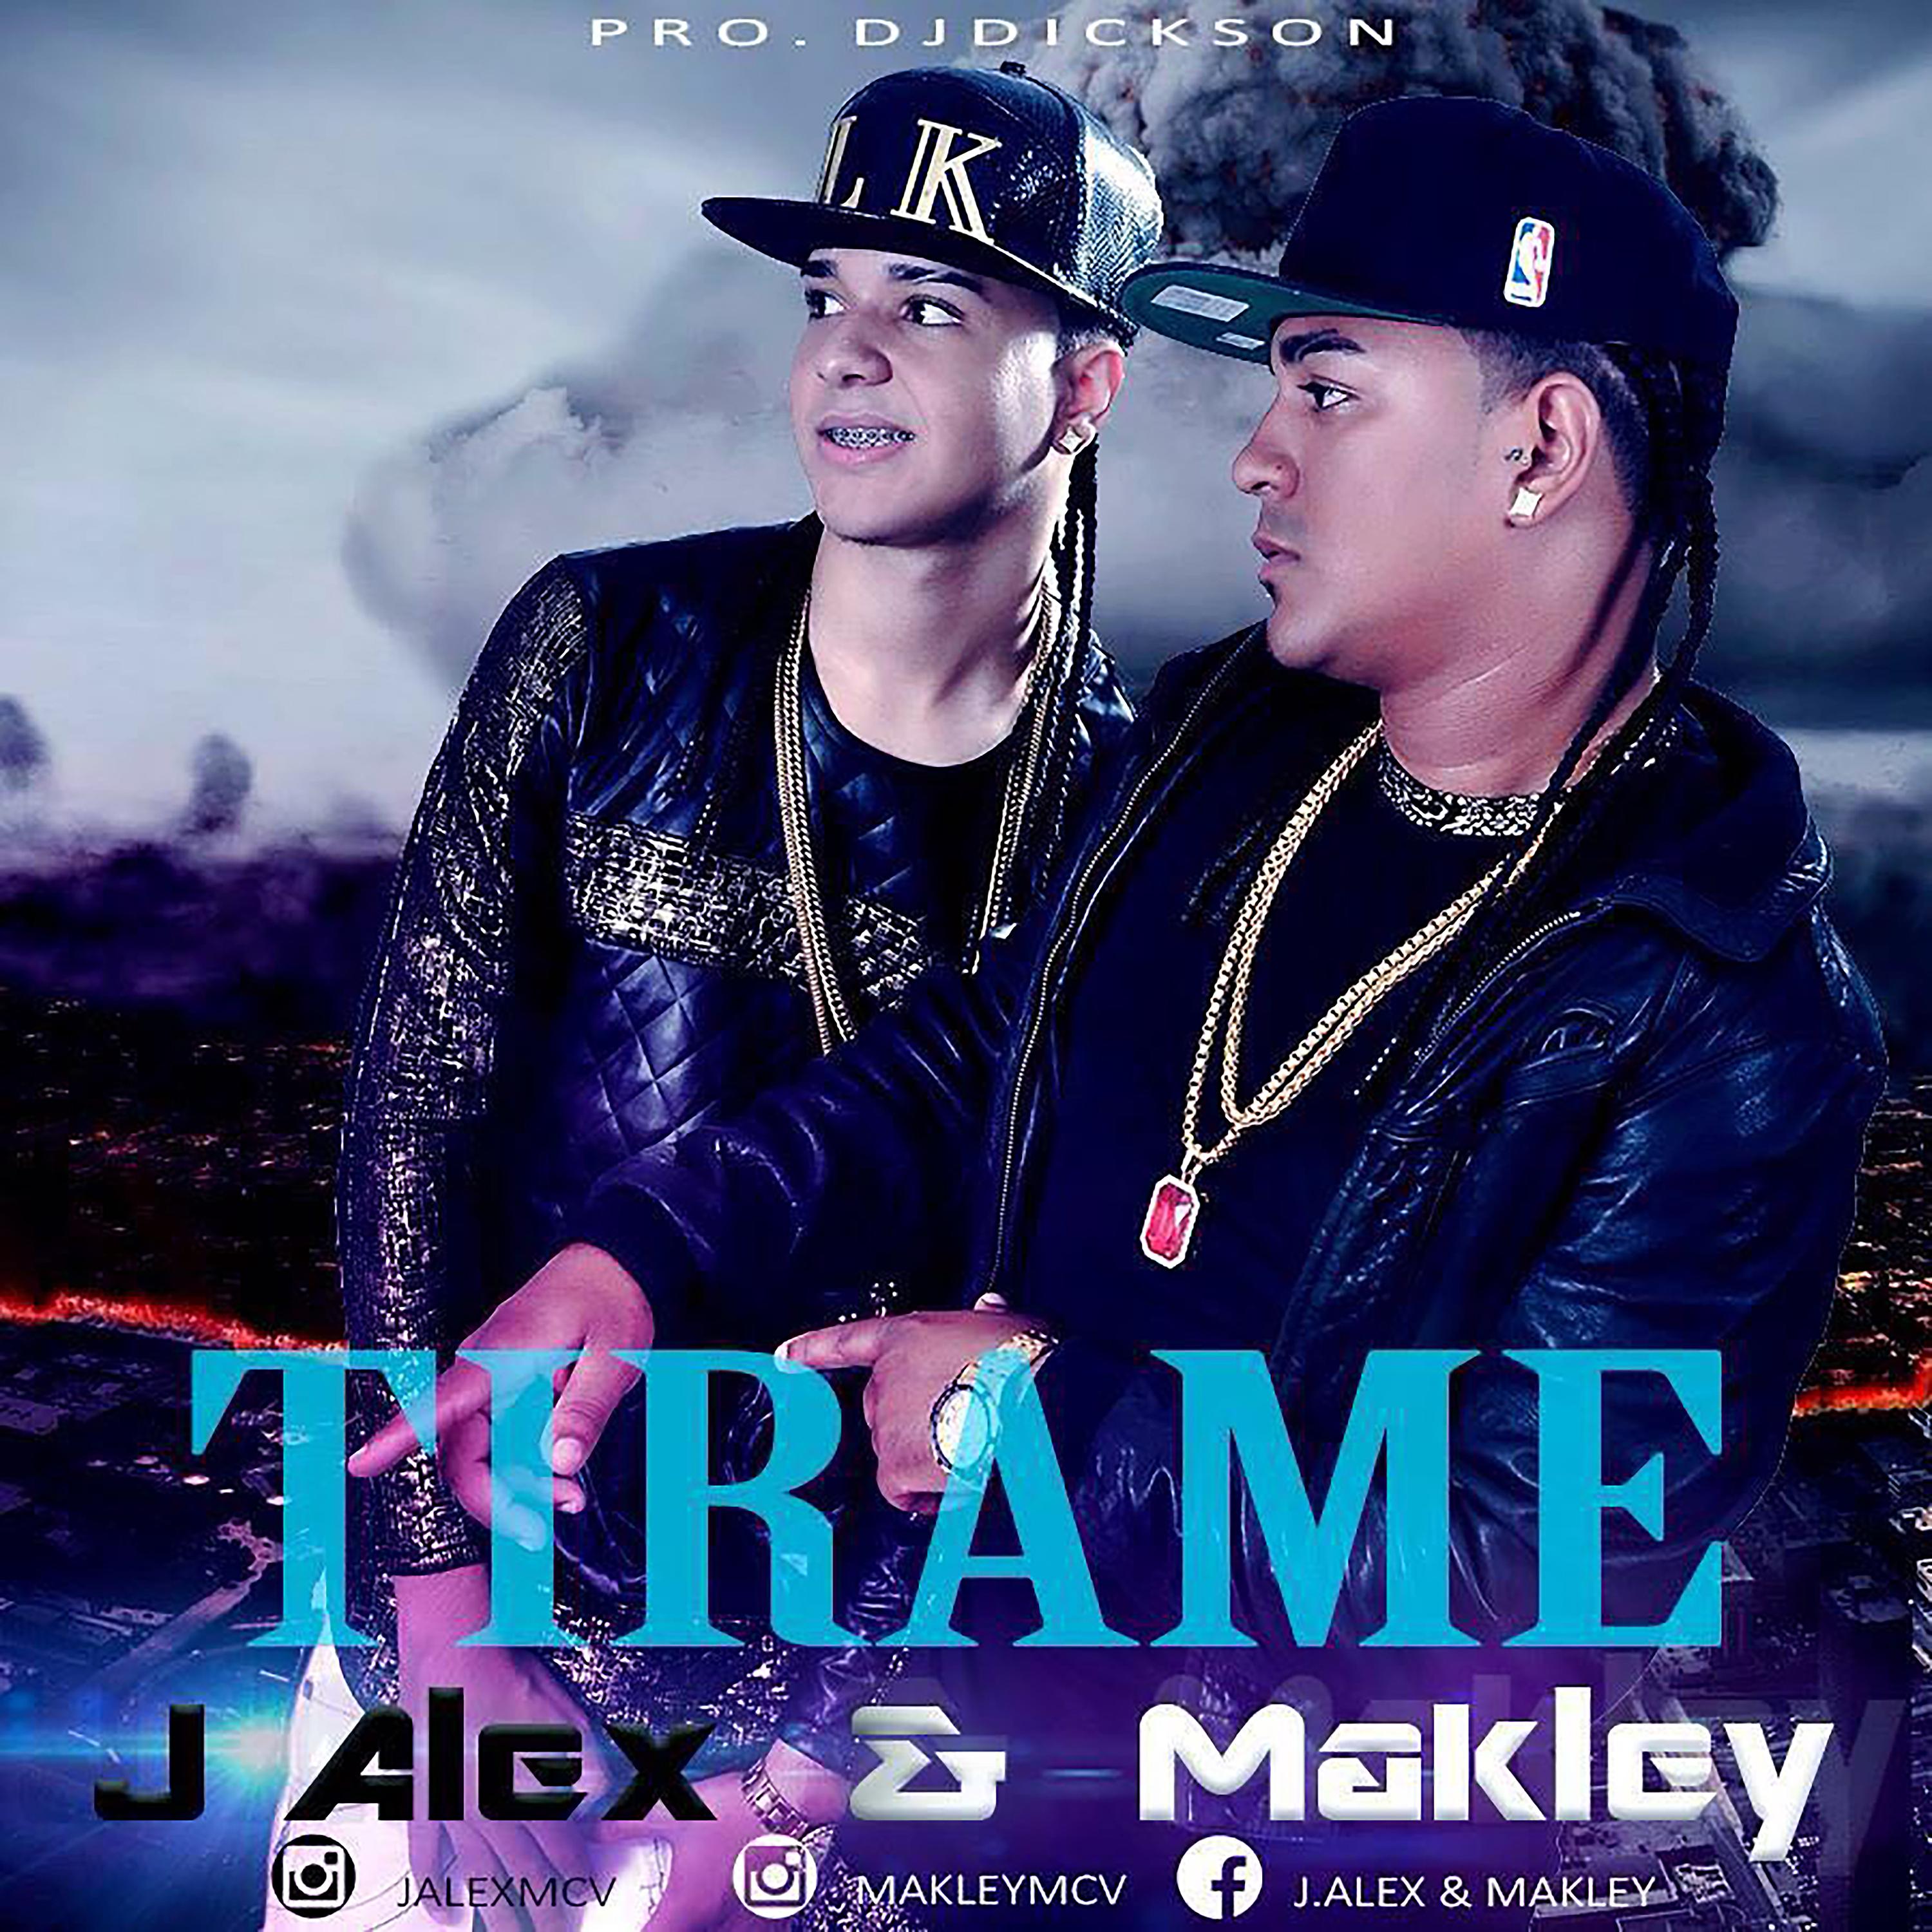 Постер альбома Tirame